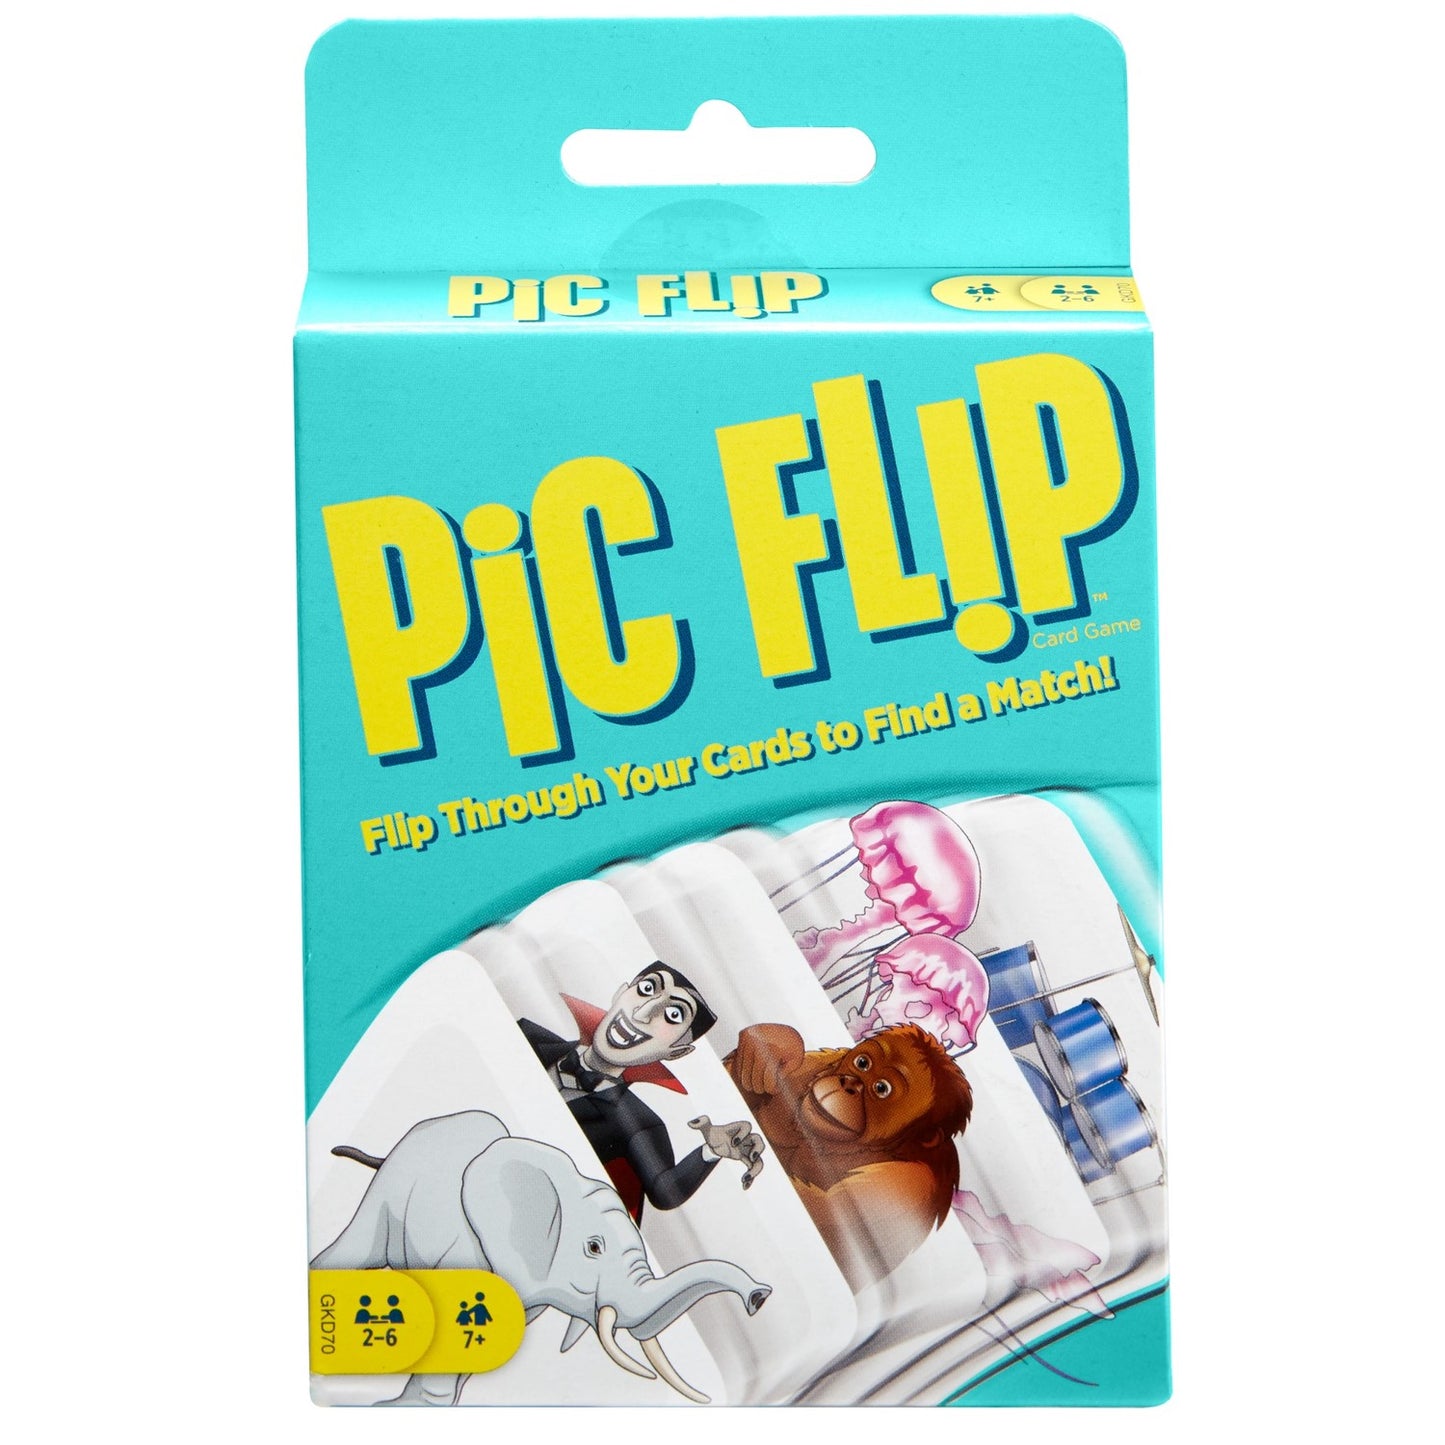 Mattel 8 Card Games Mega Pack Uno Dos Pictionary Phase MadGab Bold Blink PicFlip